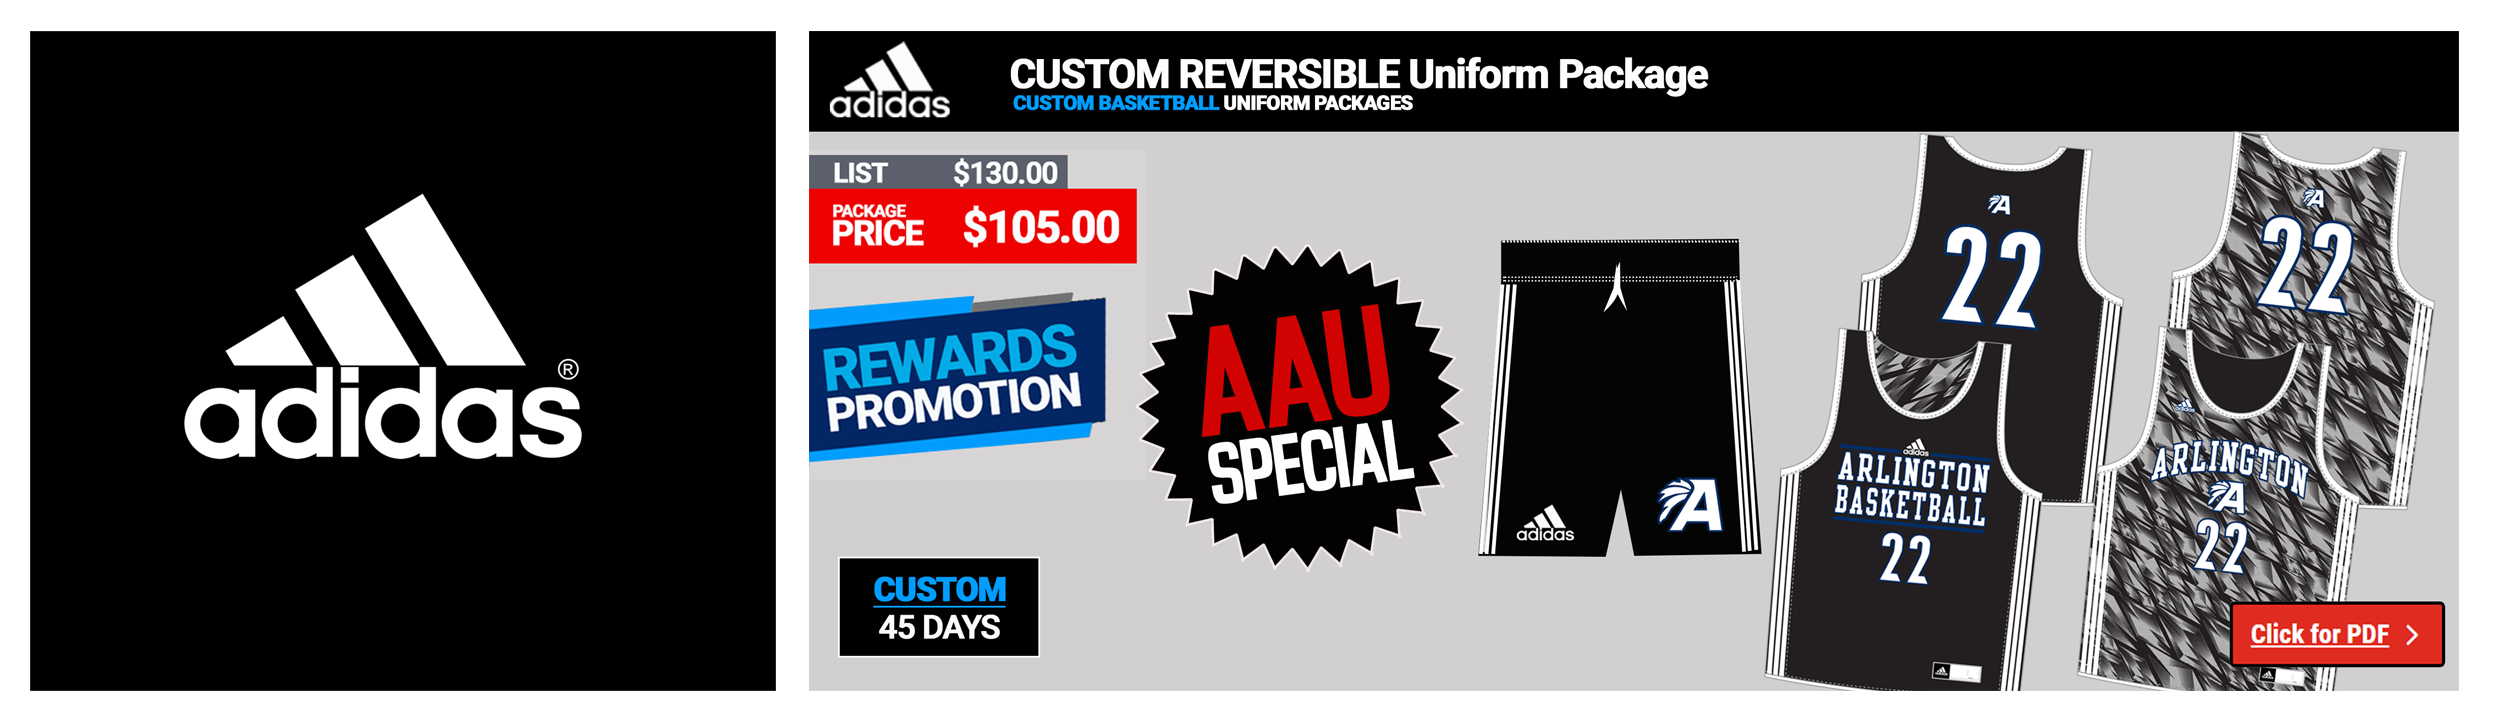 Adidas Custom Reversible Basketball Uniform Packages